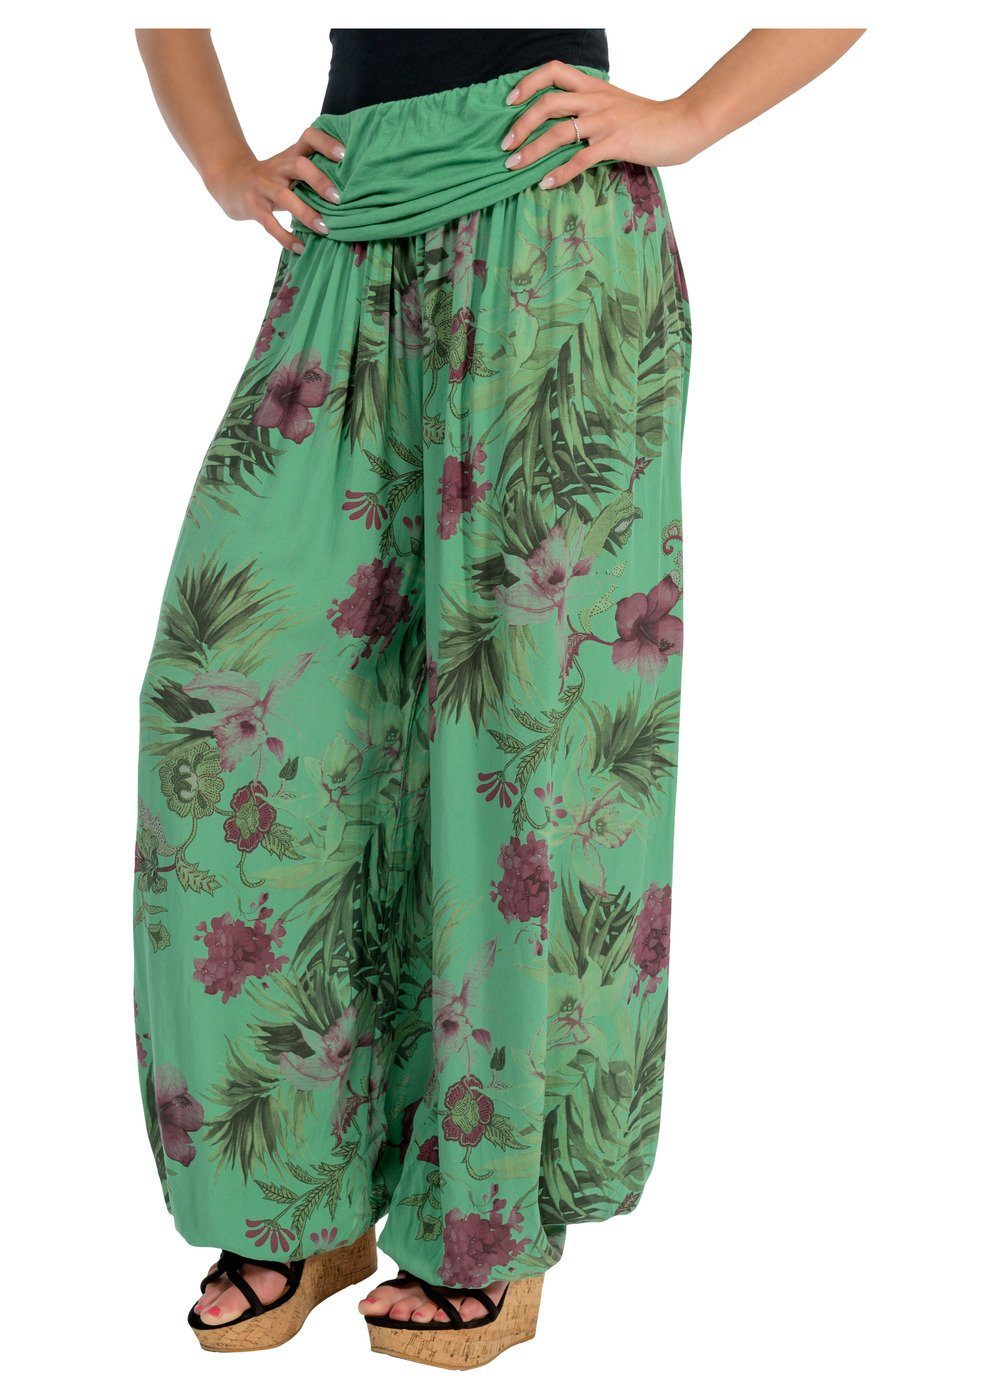 Aladinhose grün more Einheitsgröße 8939 malito fashion Muster than mit floralem Haremshose